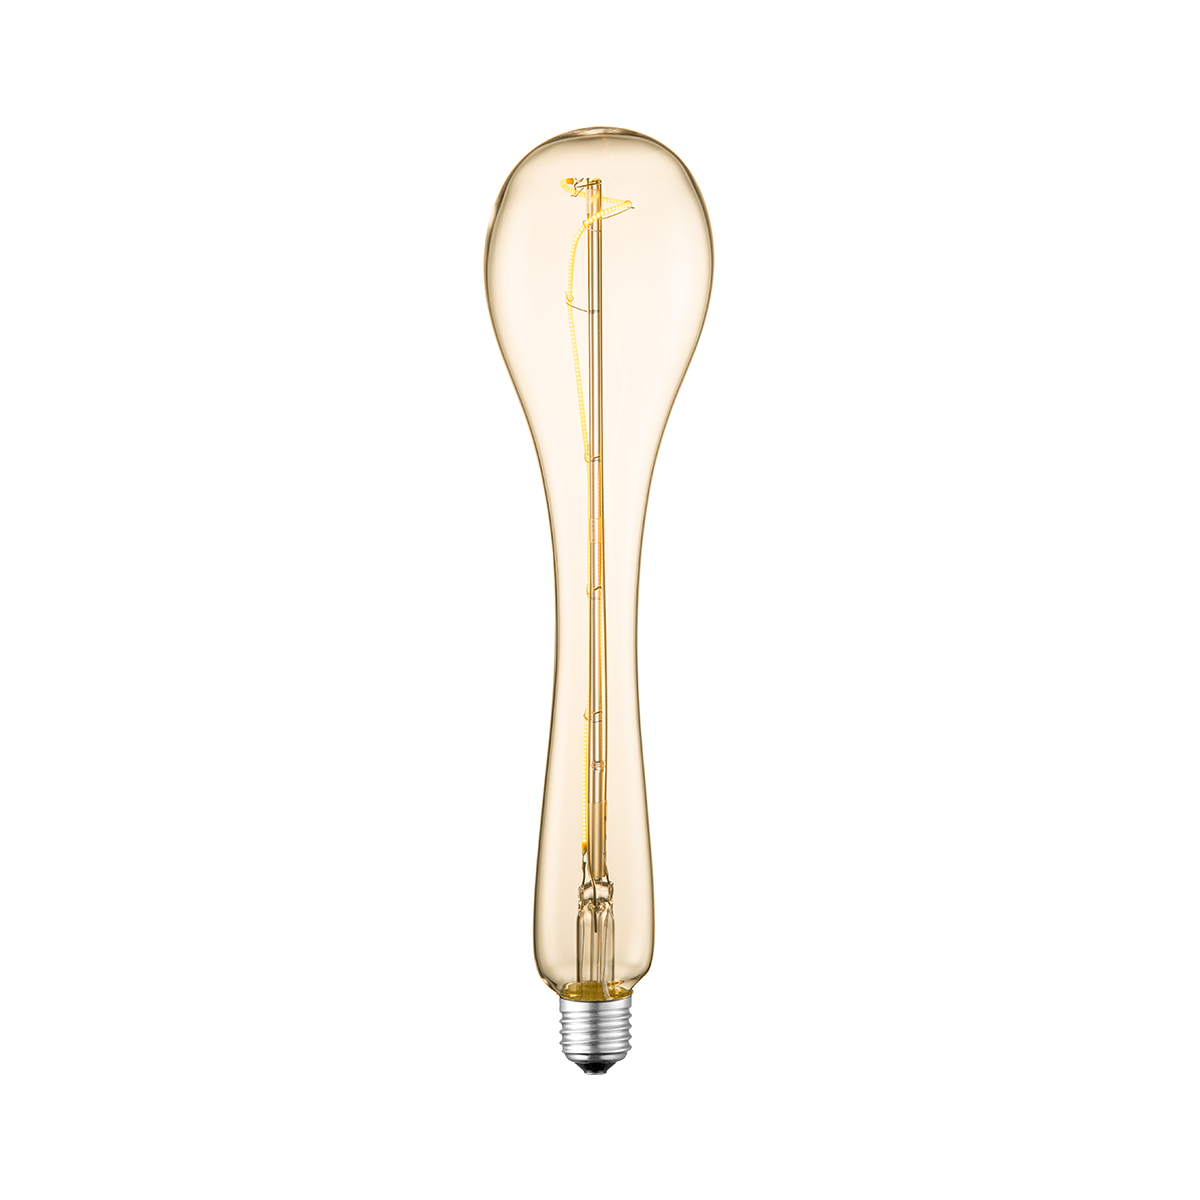 Tangla lighting - TLB-8108-04AM - LED Light Bulb Single Spiral filament - special 4W amber - baton - dimmable - E27